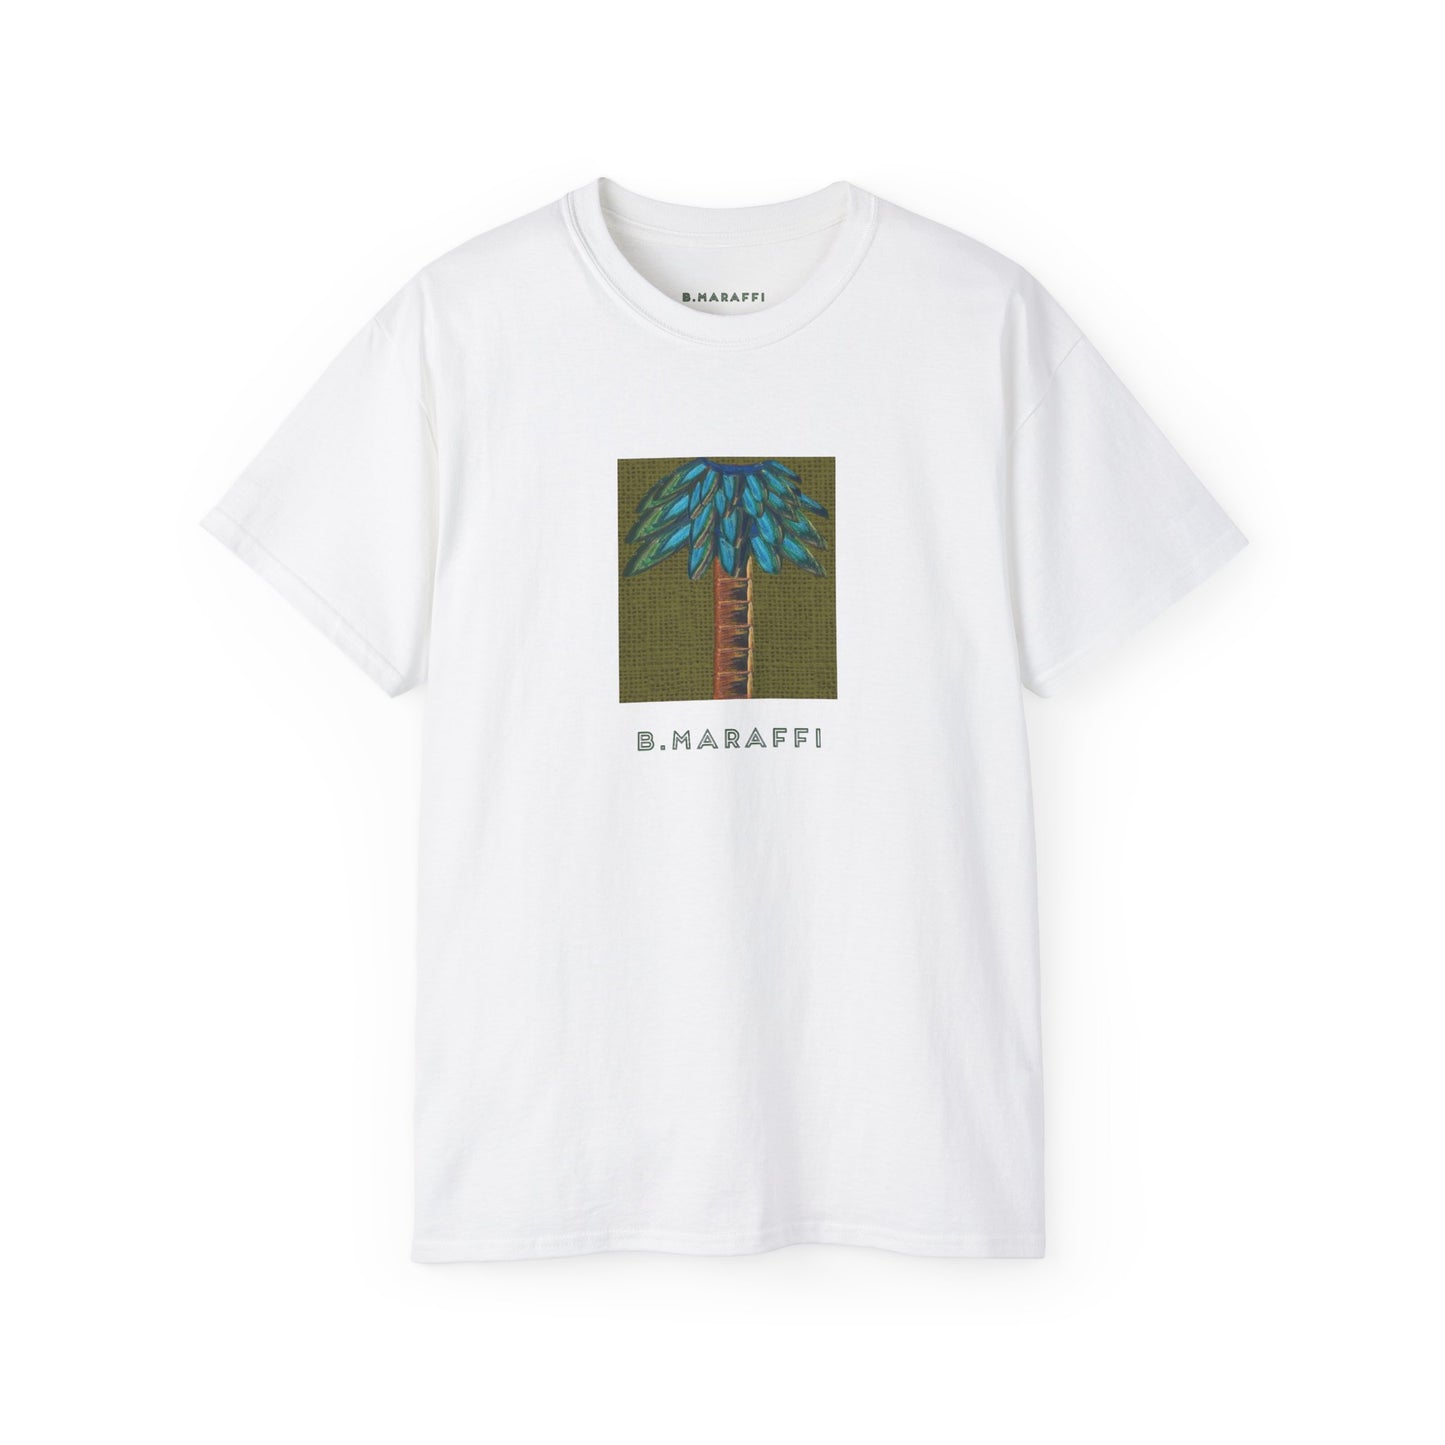 B.Maraffi Cotton T-shirt - Tiki Palm Olive